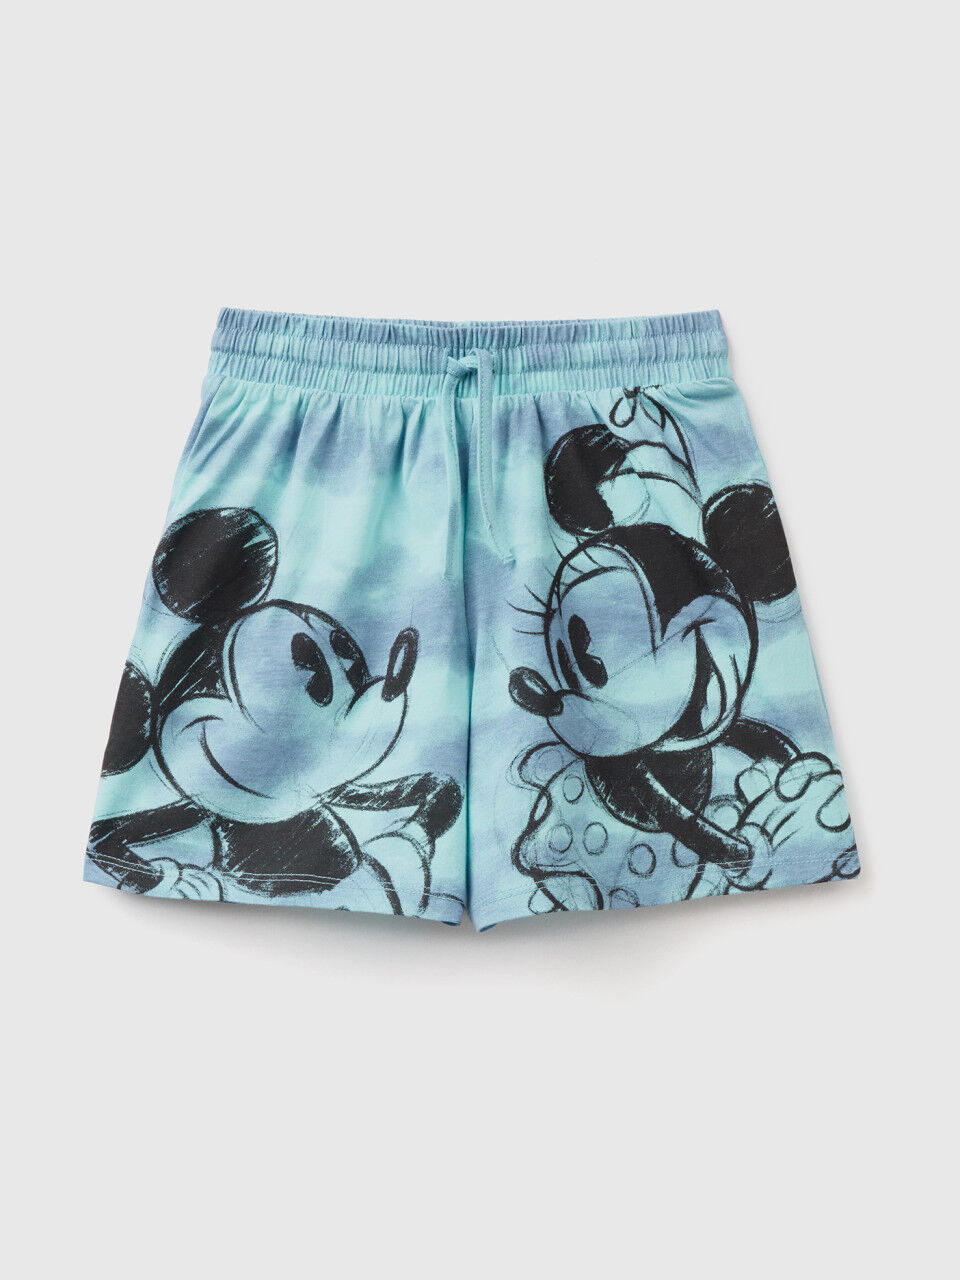 Tie-dye shorts with Disney print